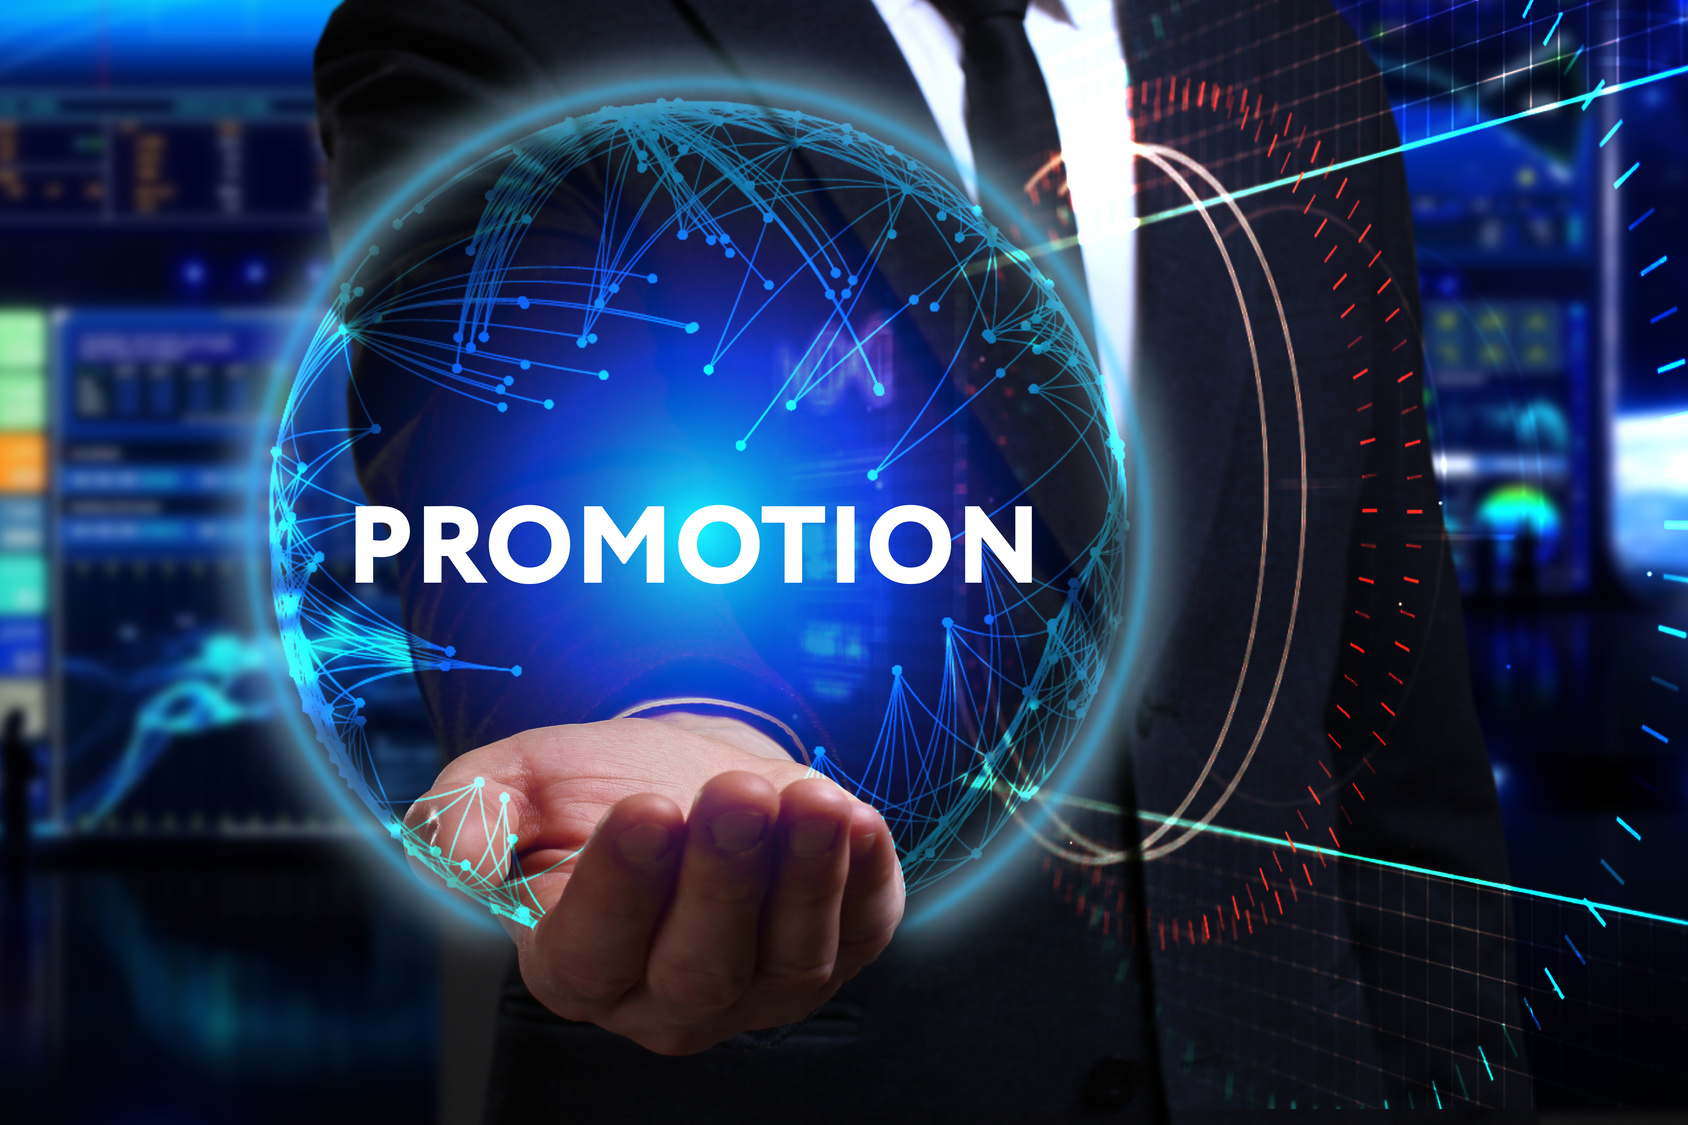 promotion strategy